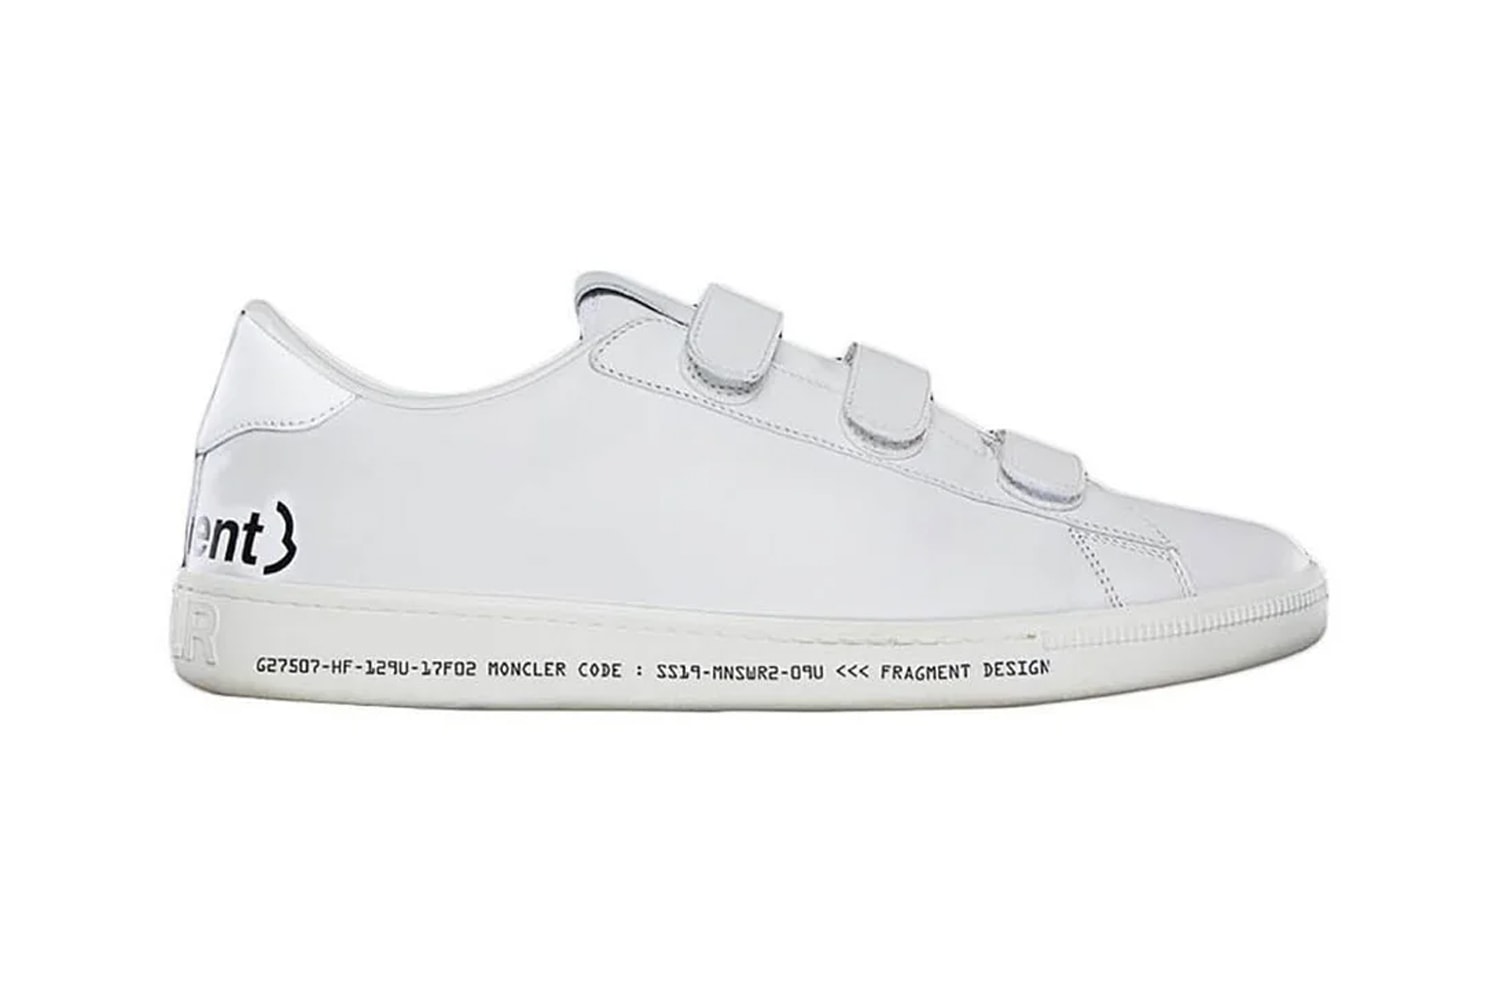 7 MONCLER FRAGMENT HIROSHI FUJIWARA Fitzroy Velcro Sneakers fragment design shoes footwear sneakers kicks Genius moncler 